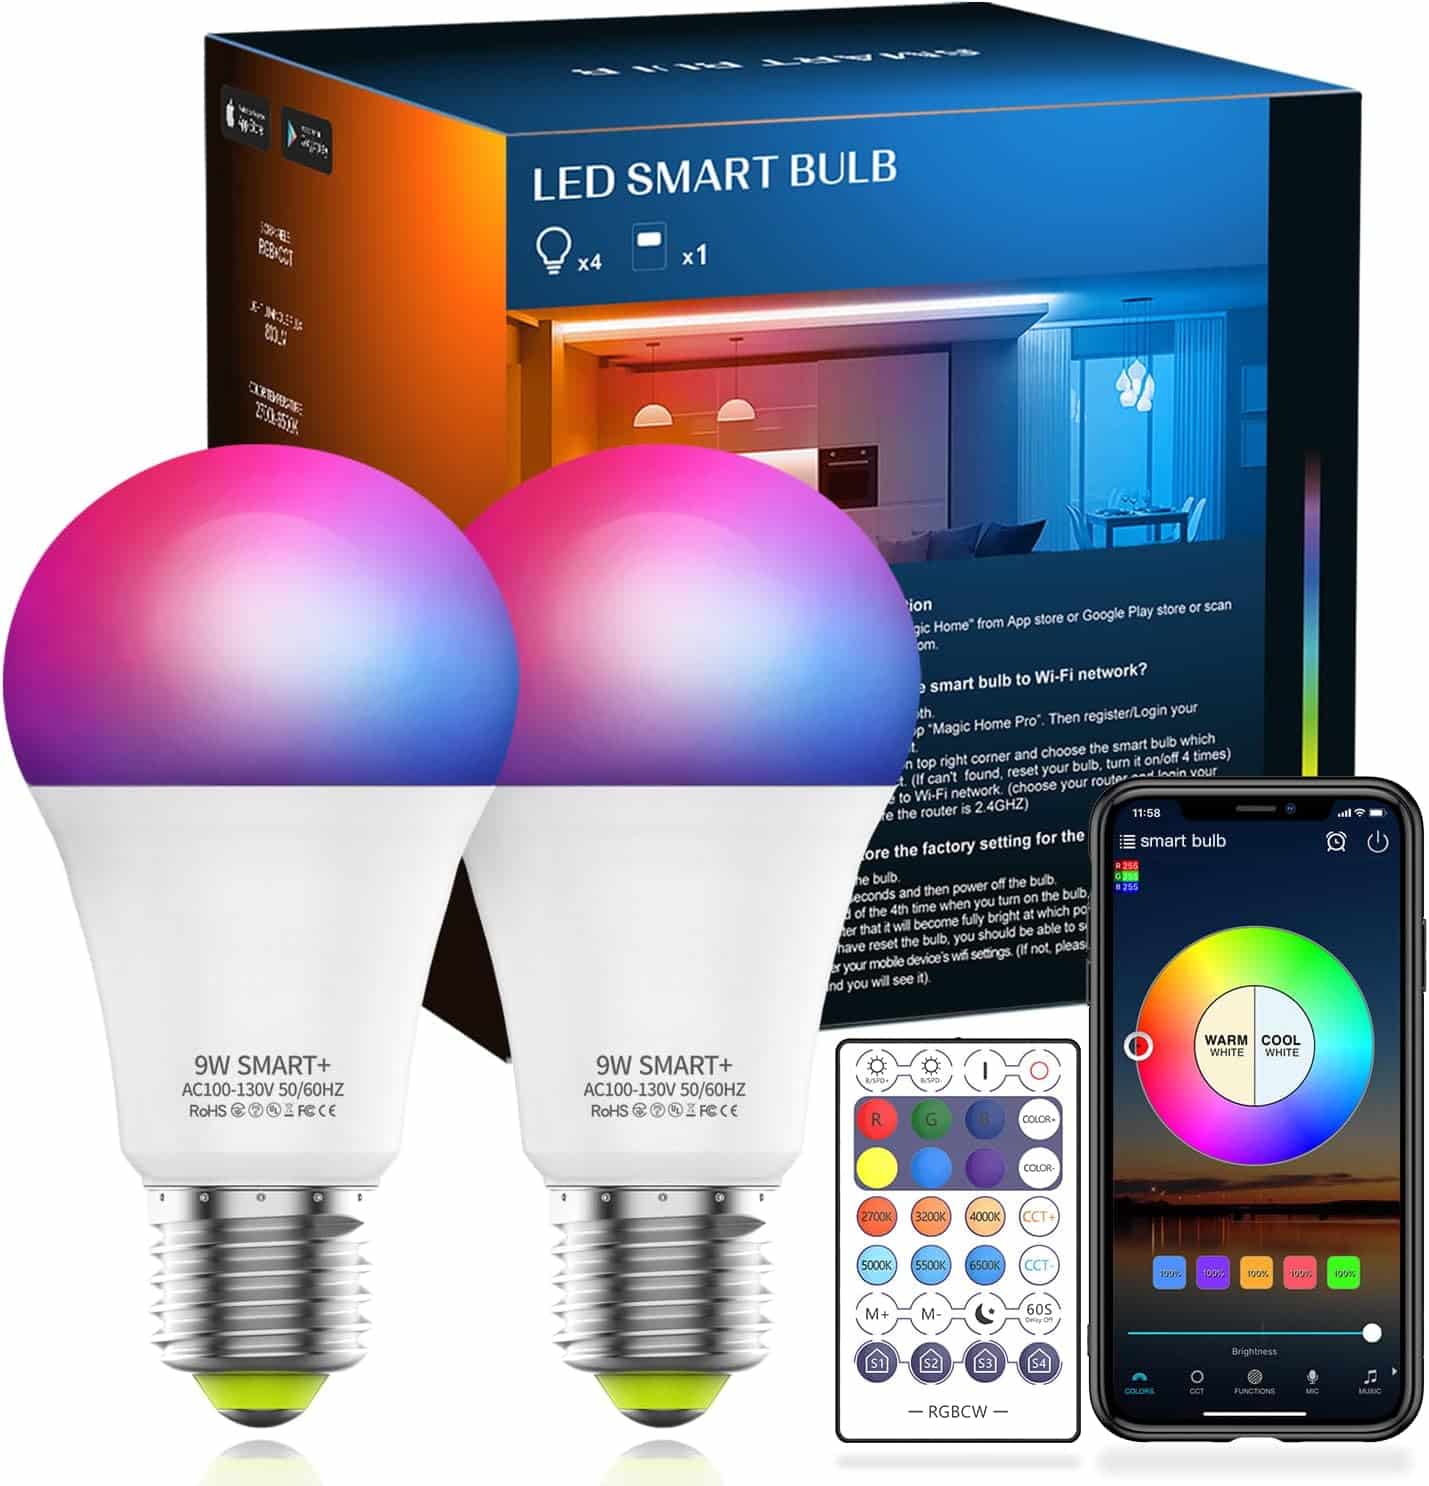 Konodar Smart Light Bulb with Remote Review